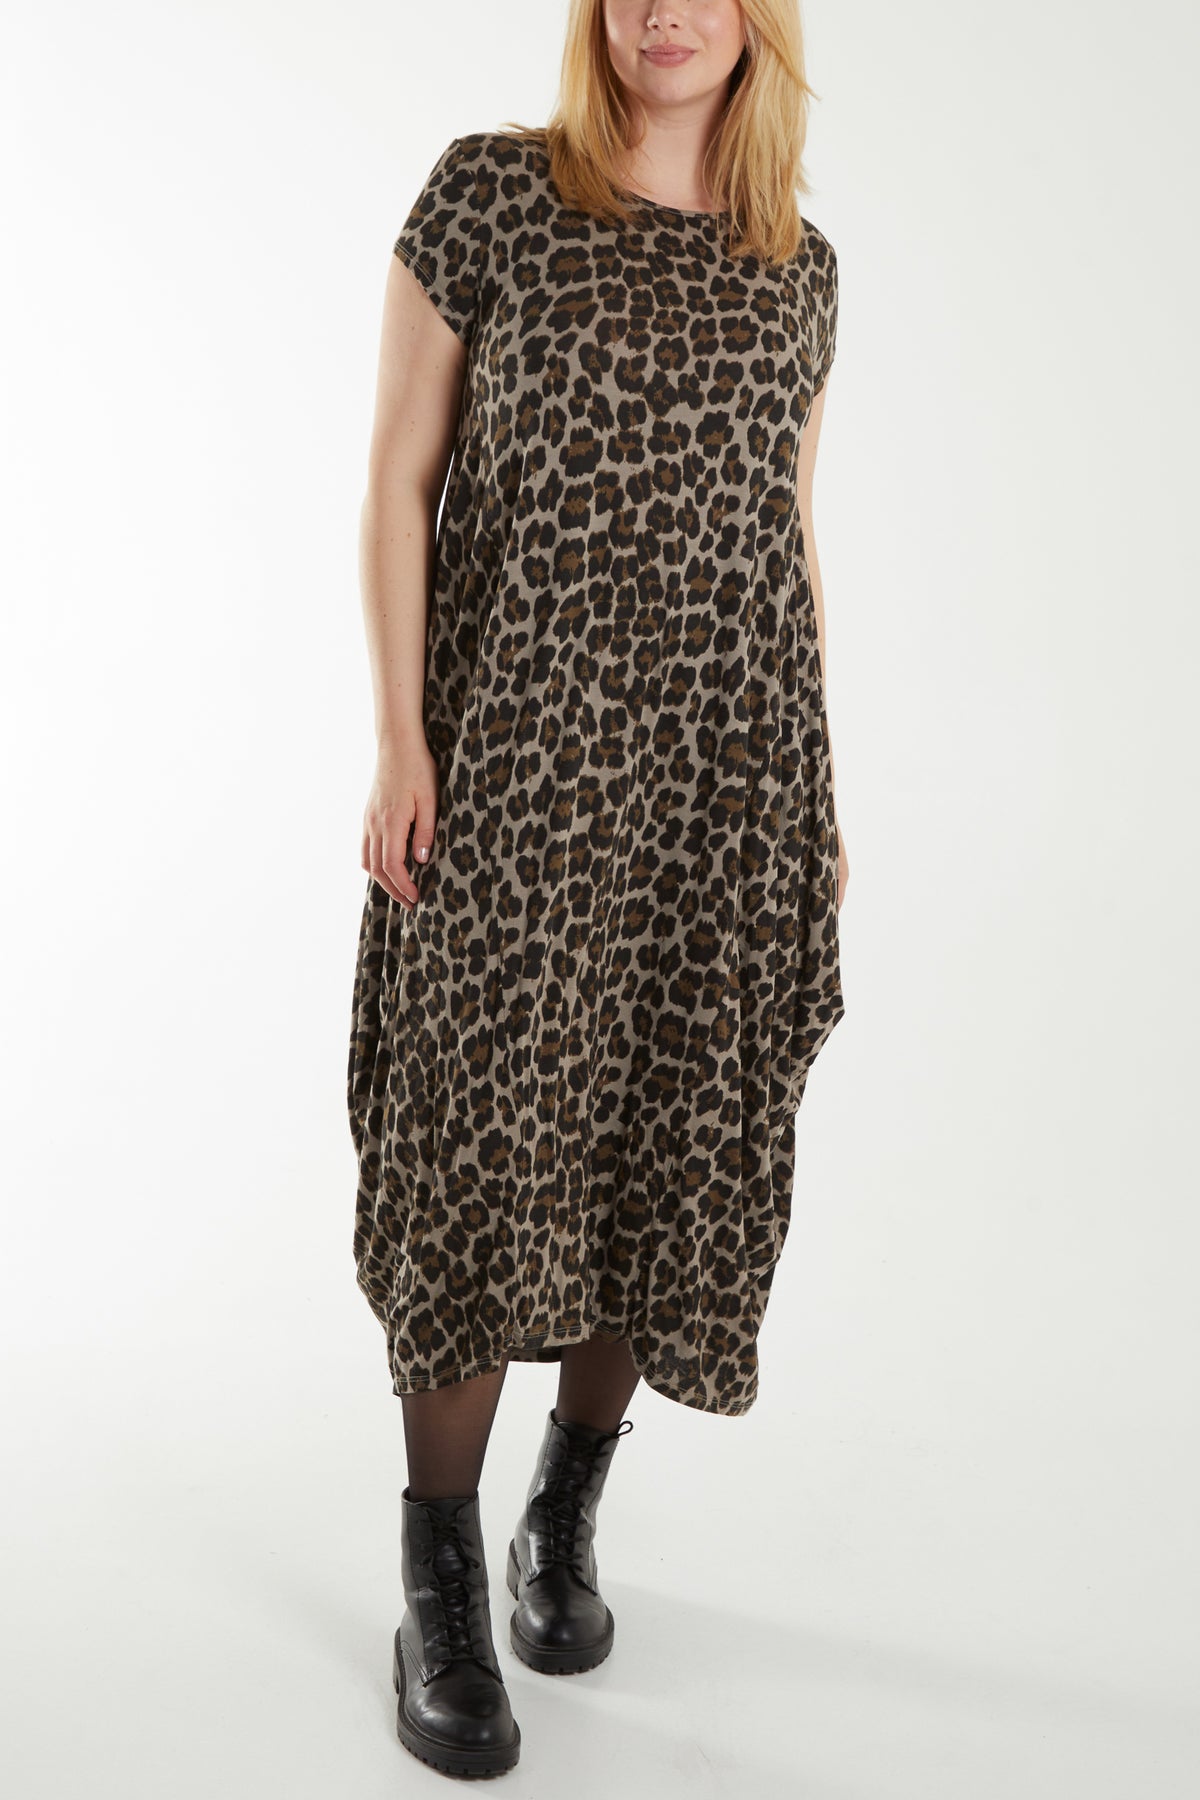 Leopard Print Cap Sleeve Parachute Dress